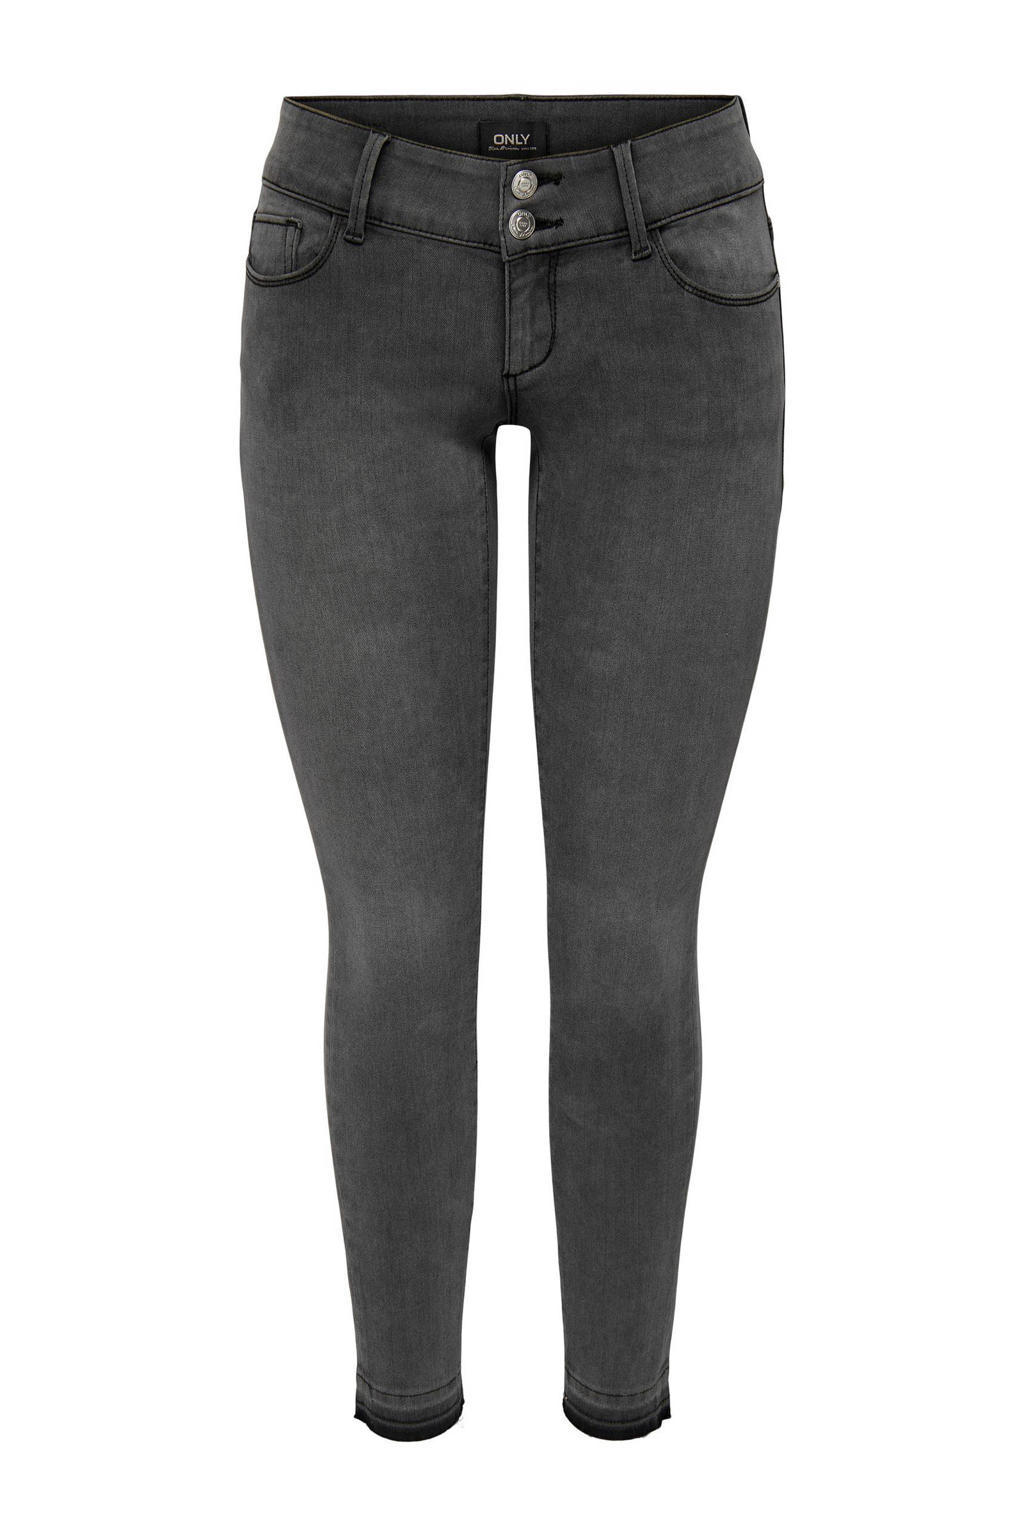 Grijze dames ONLY low waist skinny jeans van stretchdenim met rits- en knoopsluiting